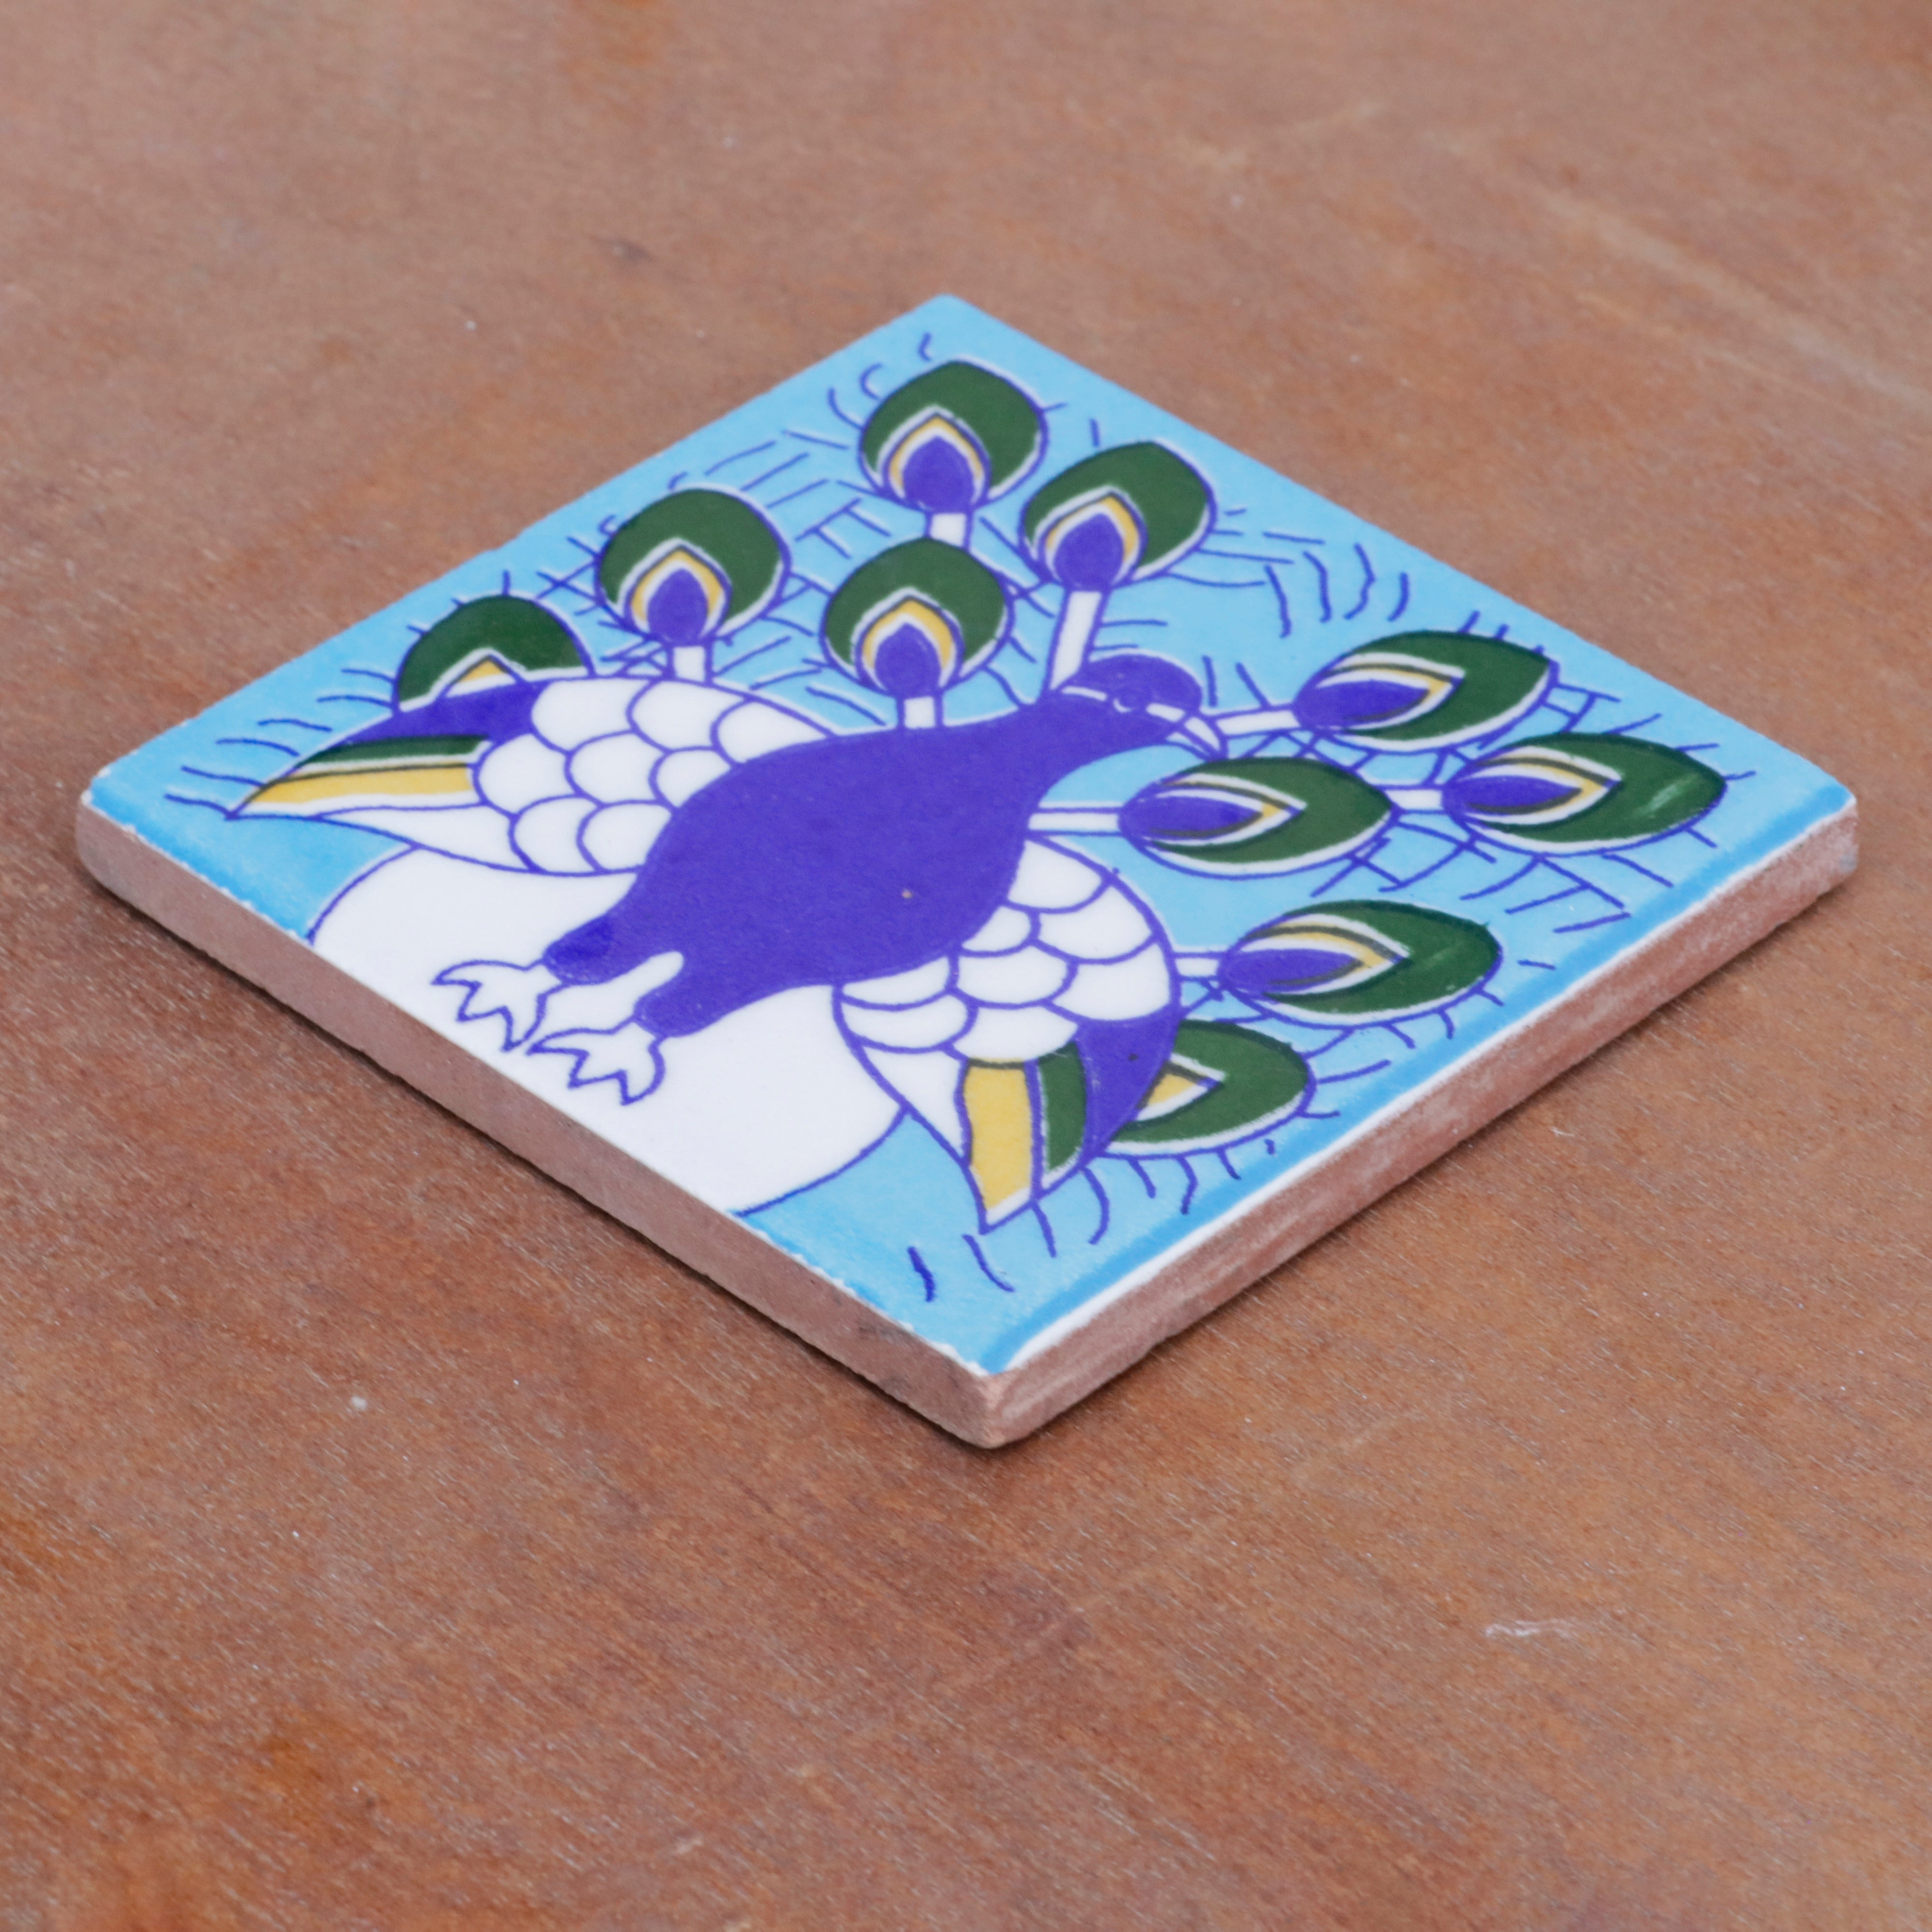 Evergreen Bold Blue Peacock Designed Ceramic Square Tile Ceramic Tile